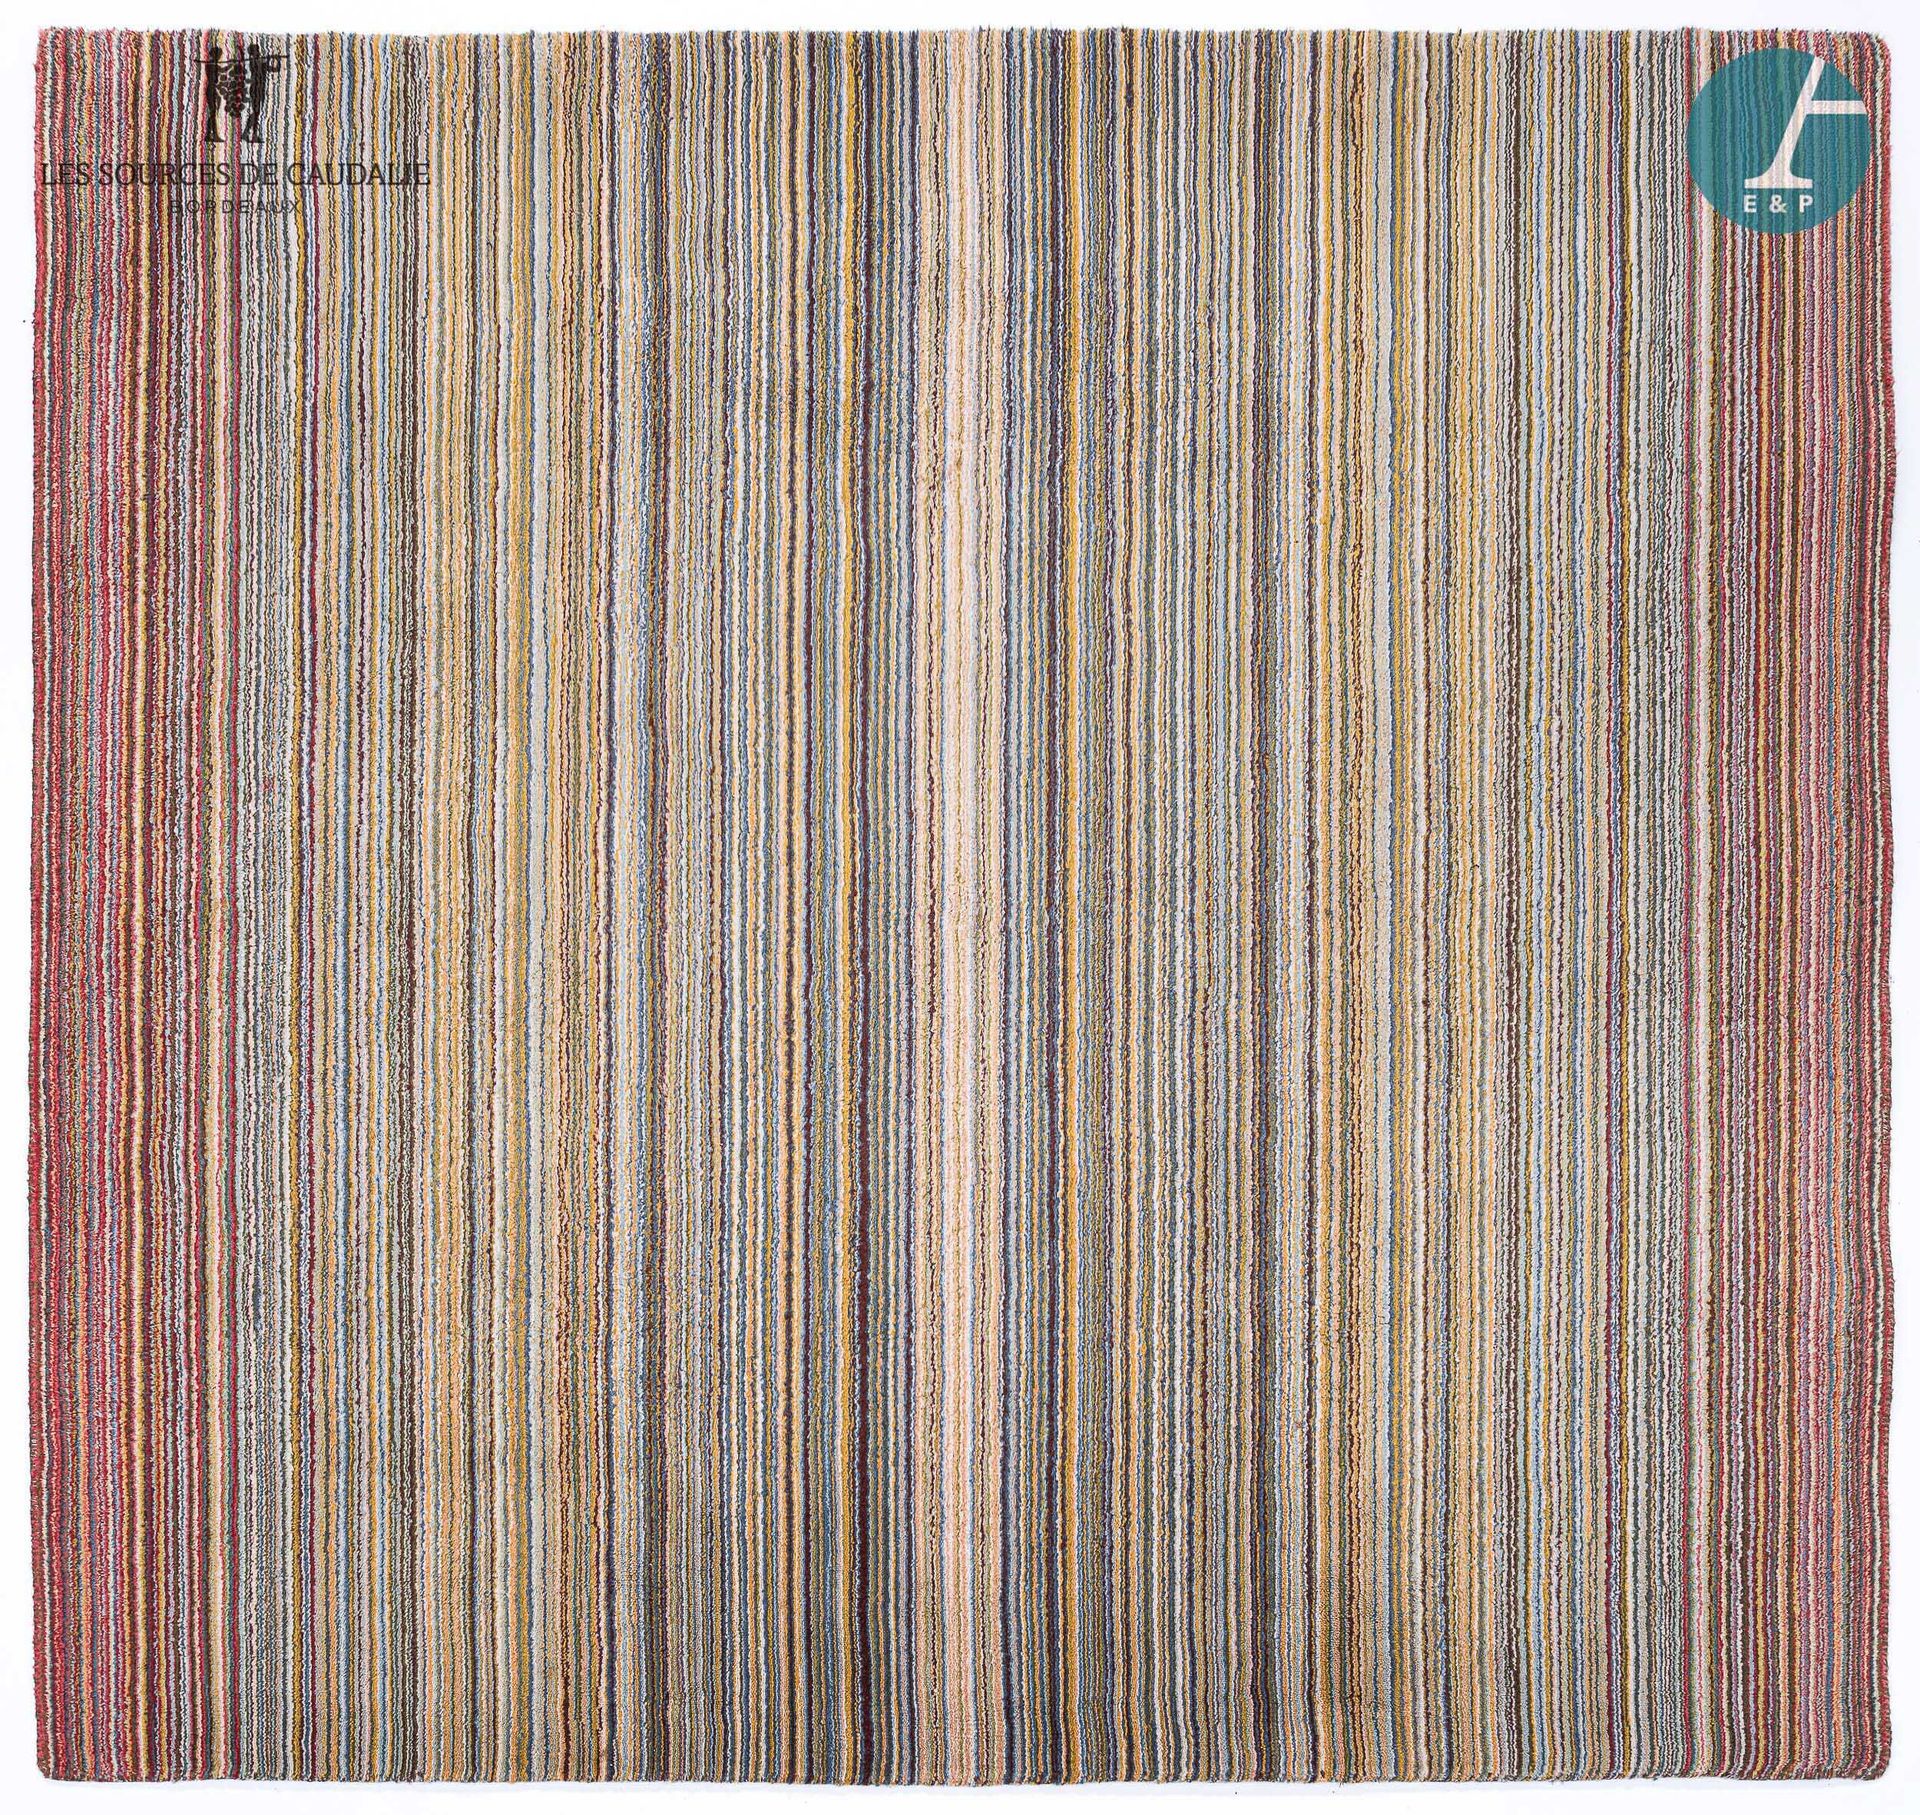 Null 来自1号房间的 "L'Etiquette"。

TOULEMONDE BOCHART，地毯上有细密的多色条纹，以蓝色、棕色和绿色为主色调。

宽：23&hellip;